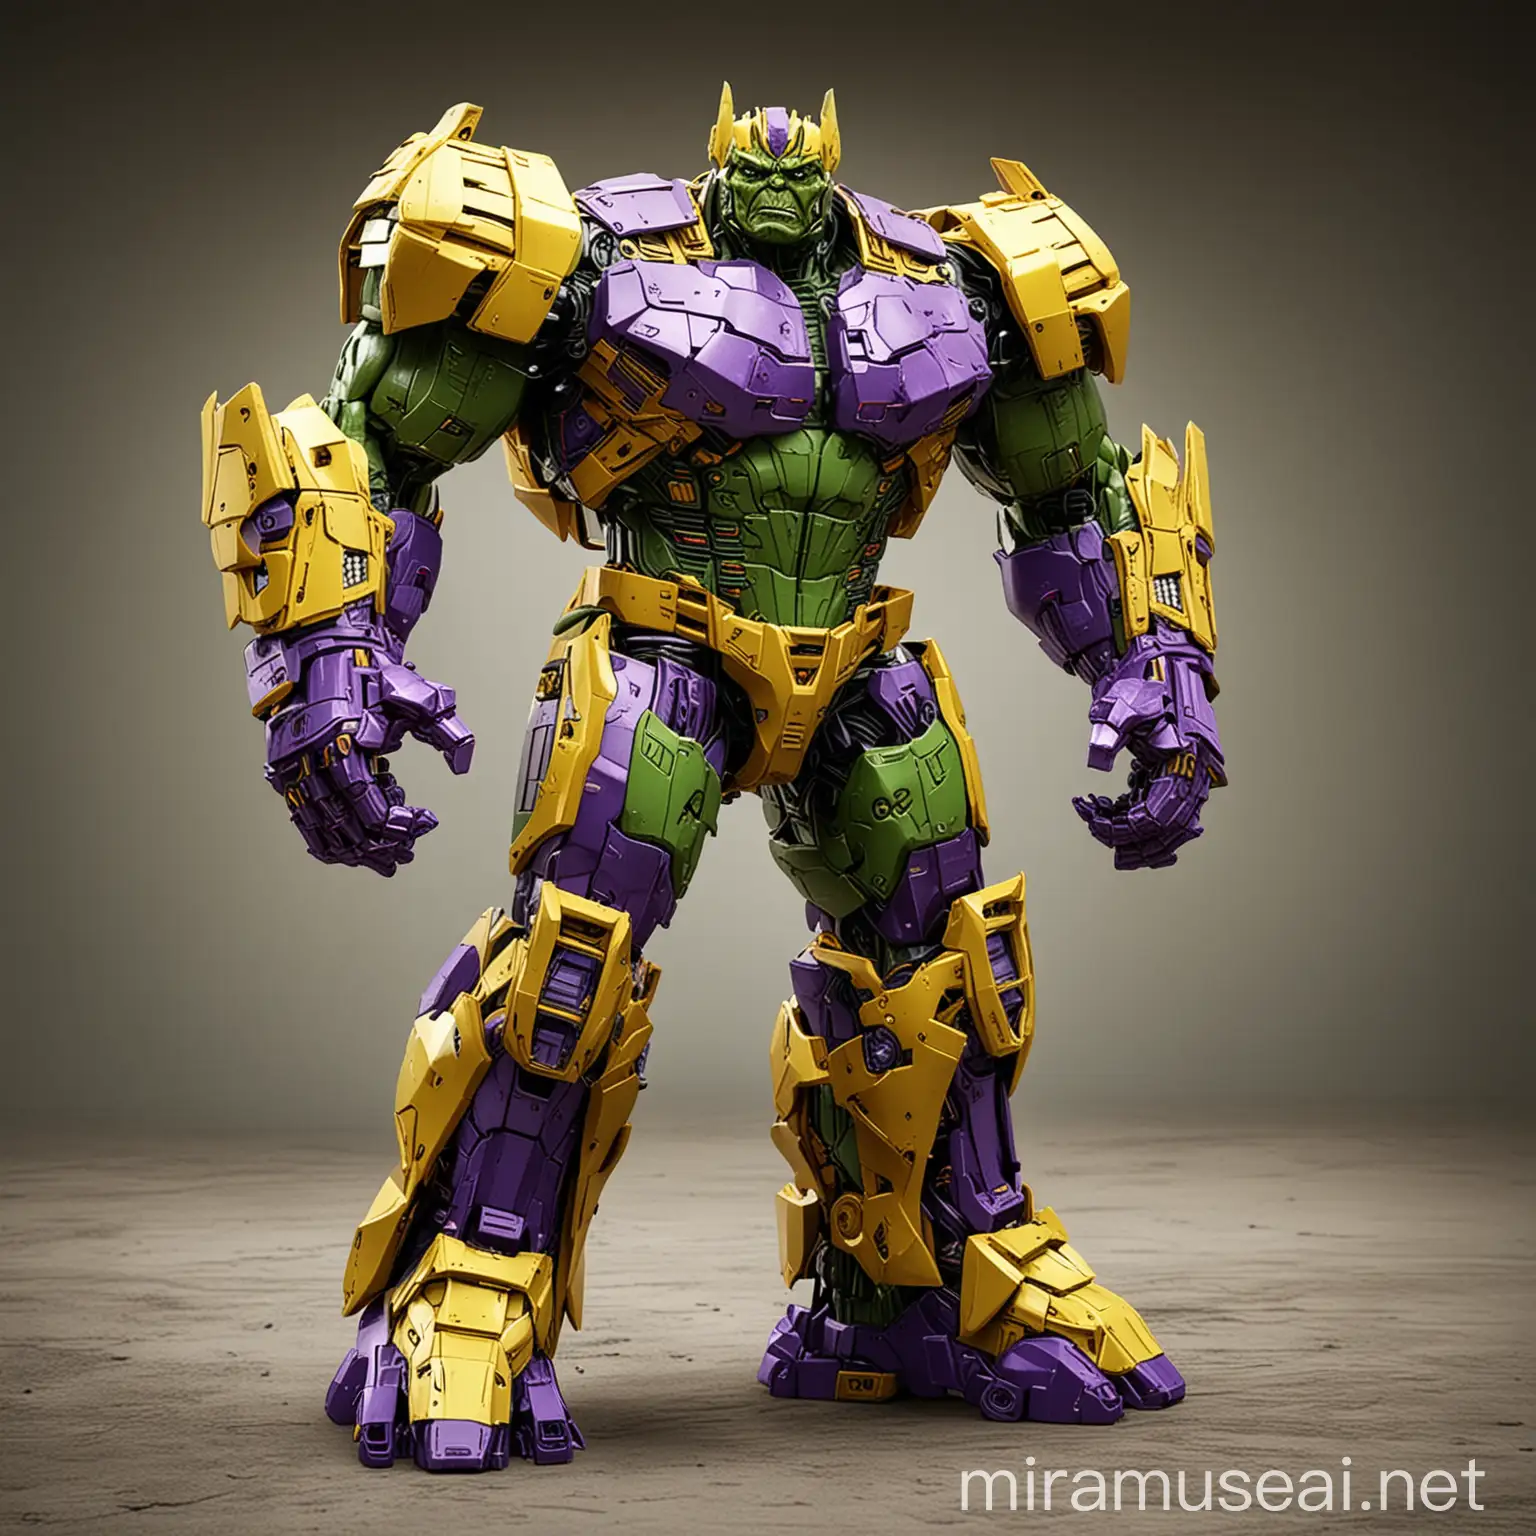 Hulk as a transformer. Yellow green and purple colored transformer